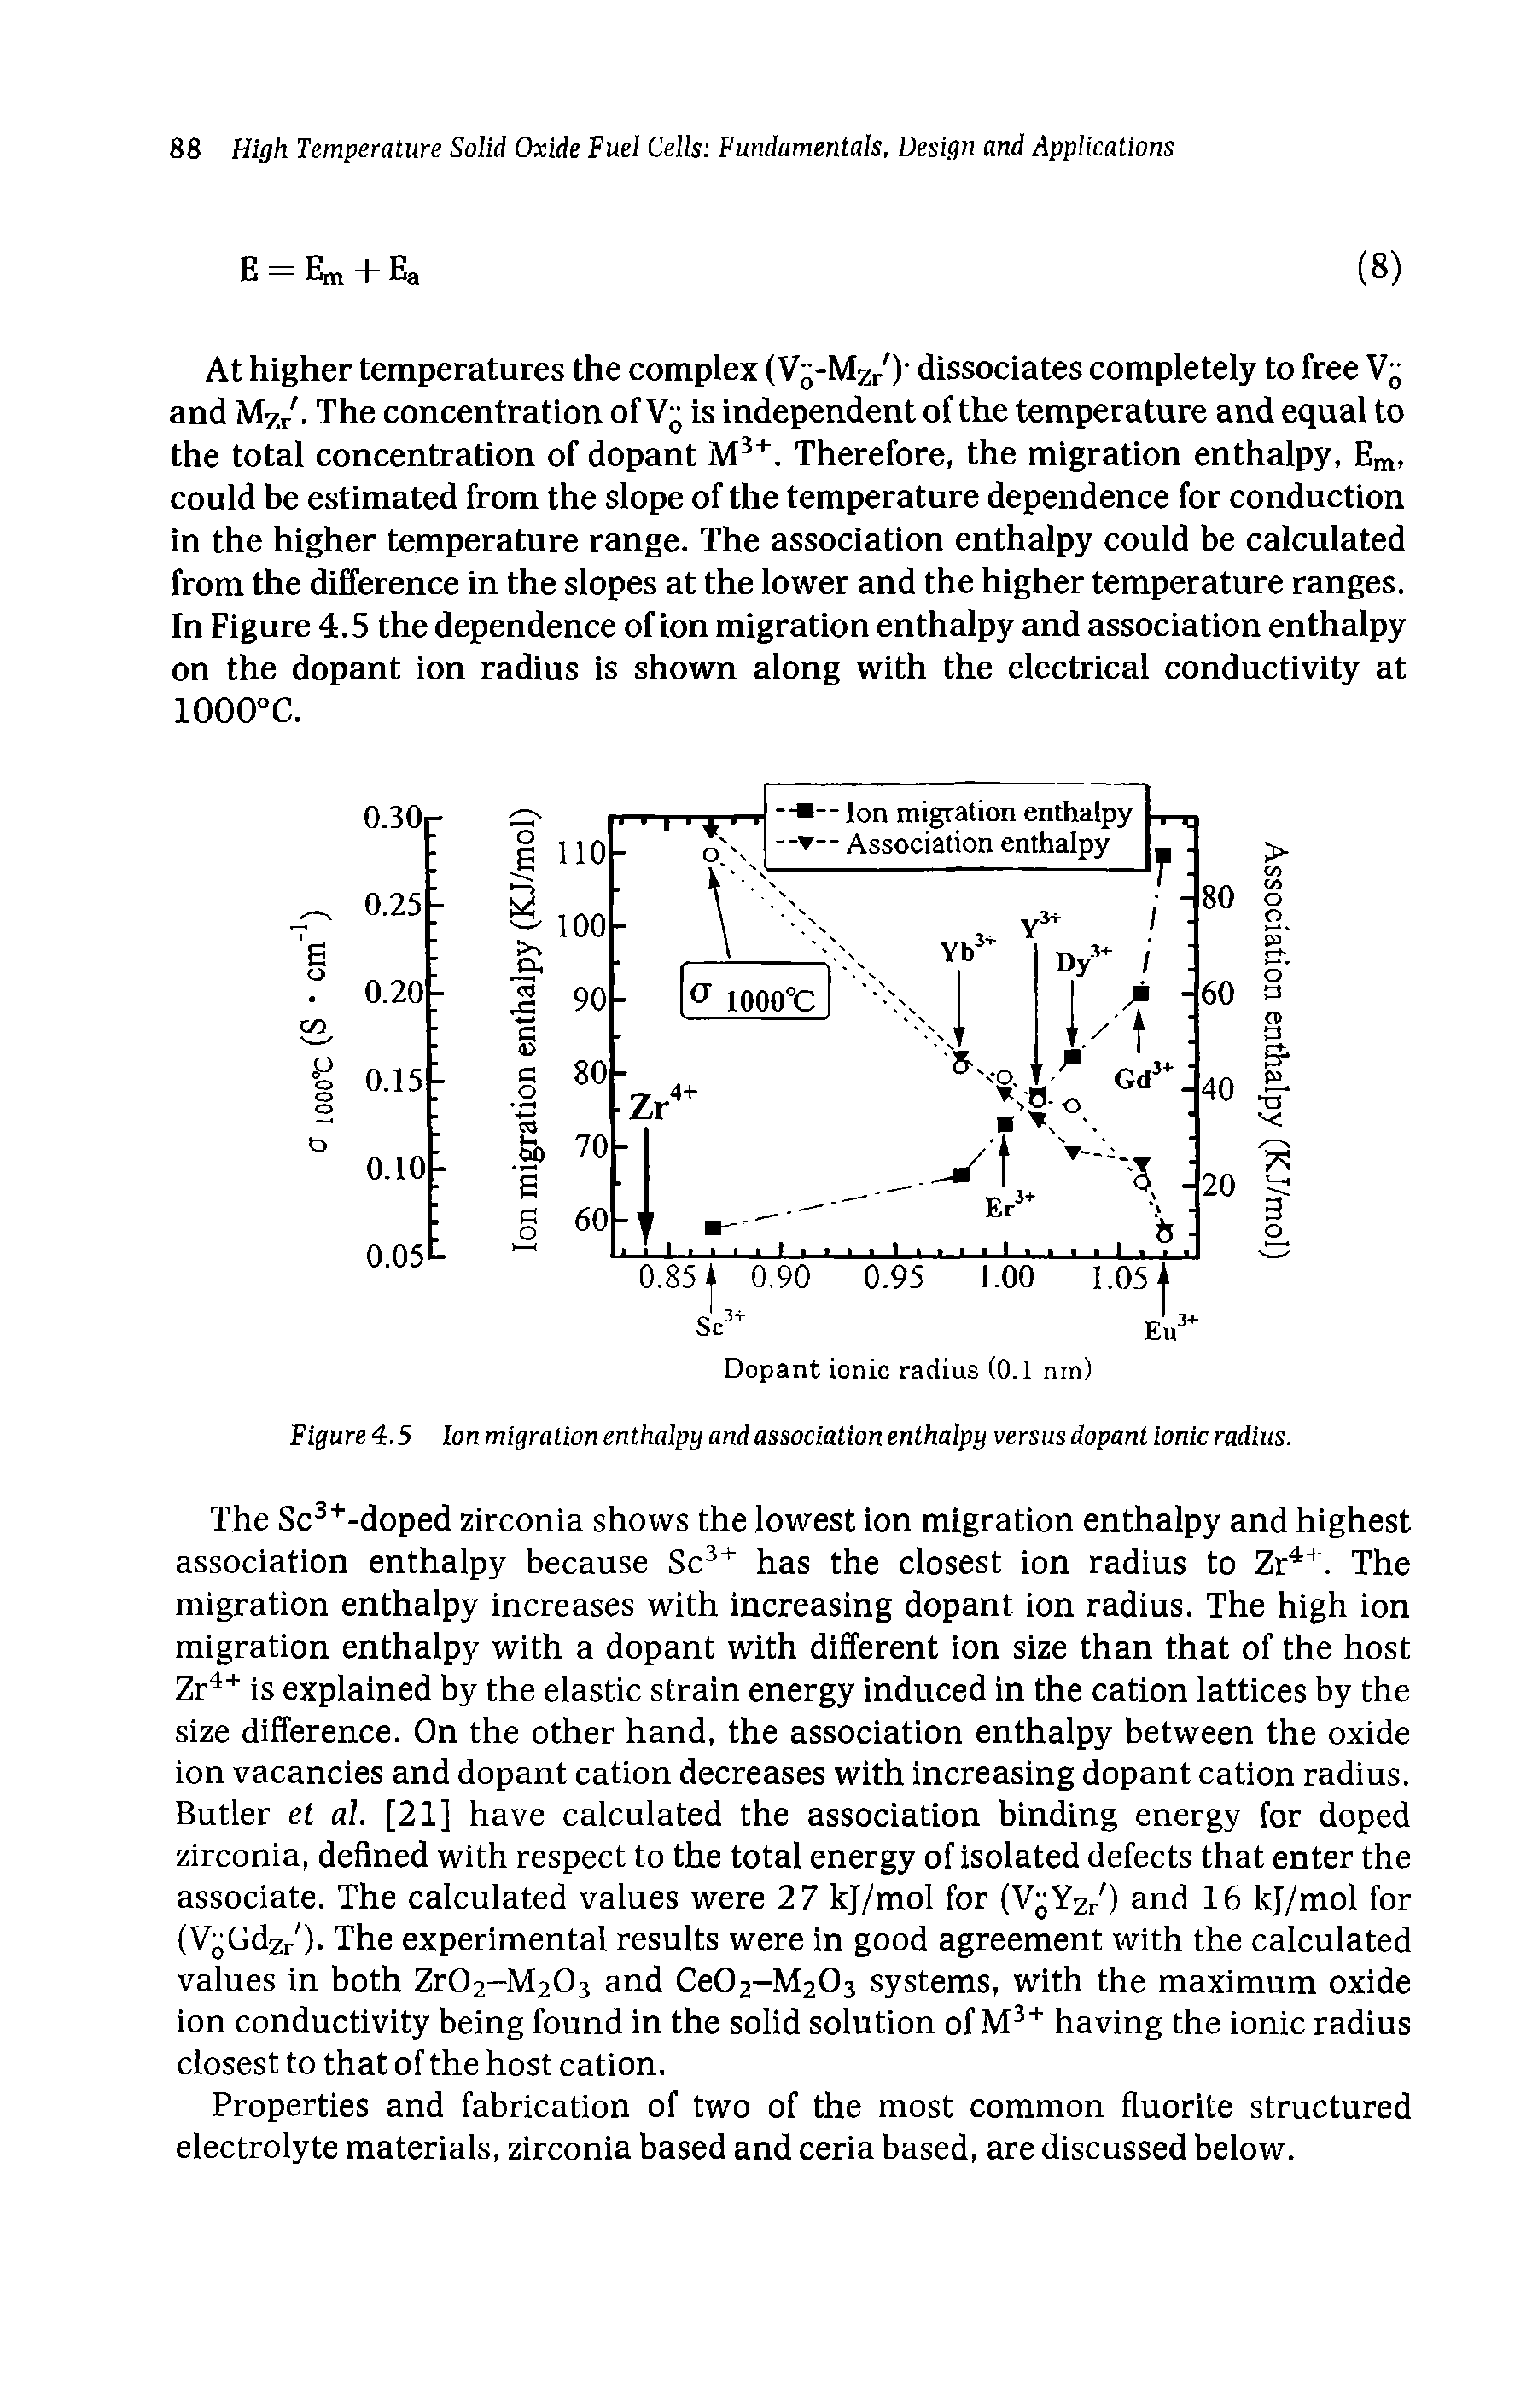 Figure 4,5 Ion migration enthalpy and association enthalpy versus dopant ionic radius.